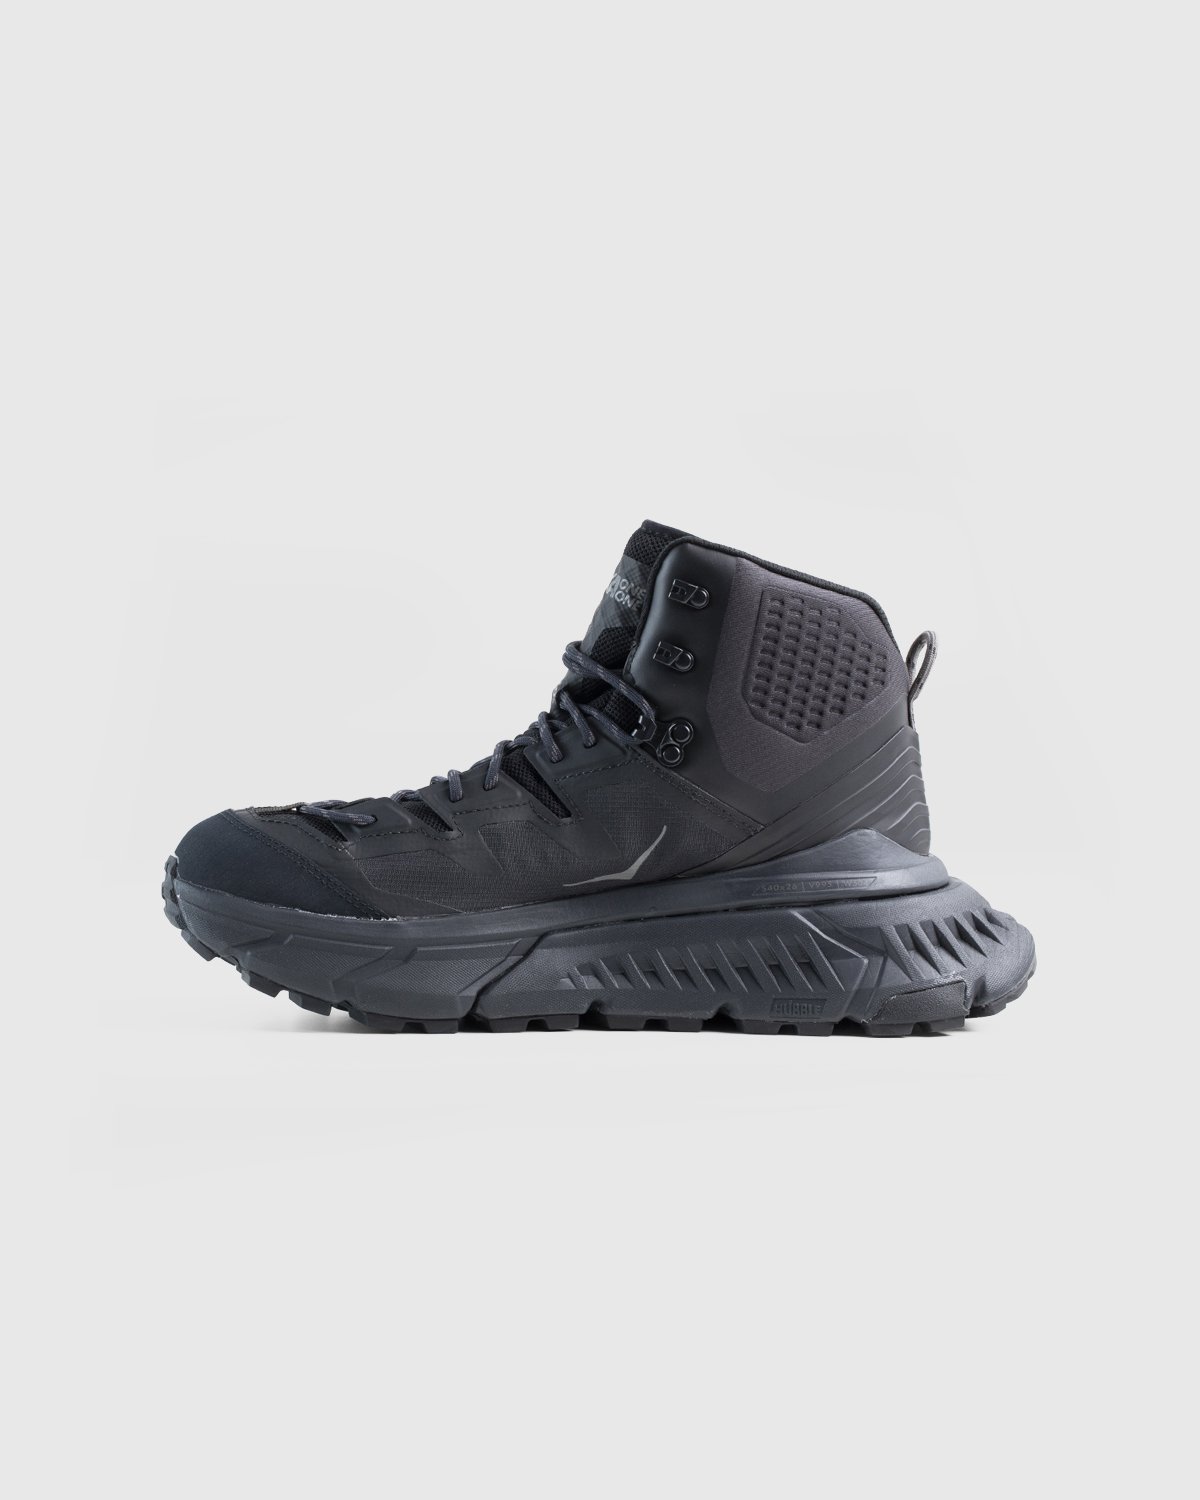 HOKA - M Tennine Hike GTX Black Dark Gull Grey - Footwear - Black - Image 2